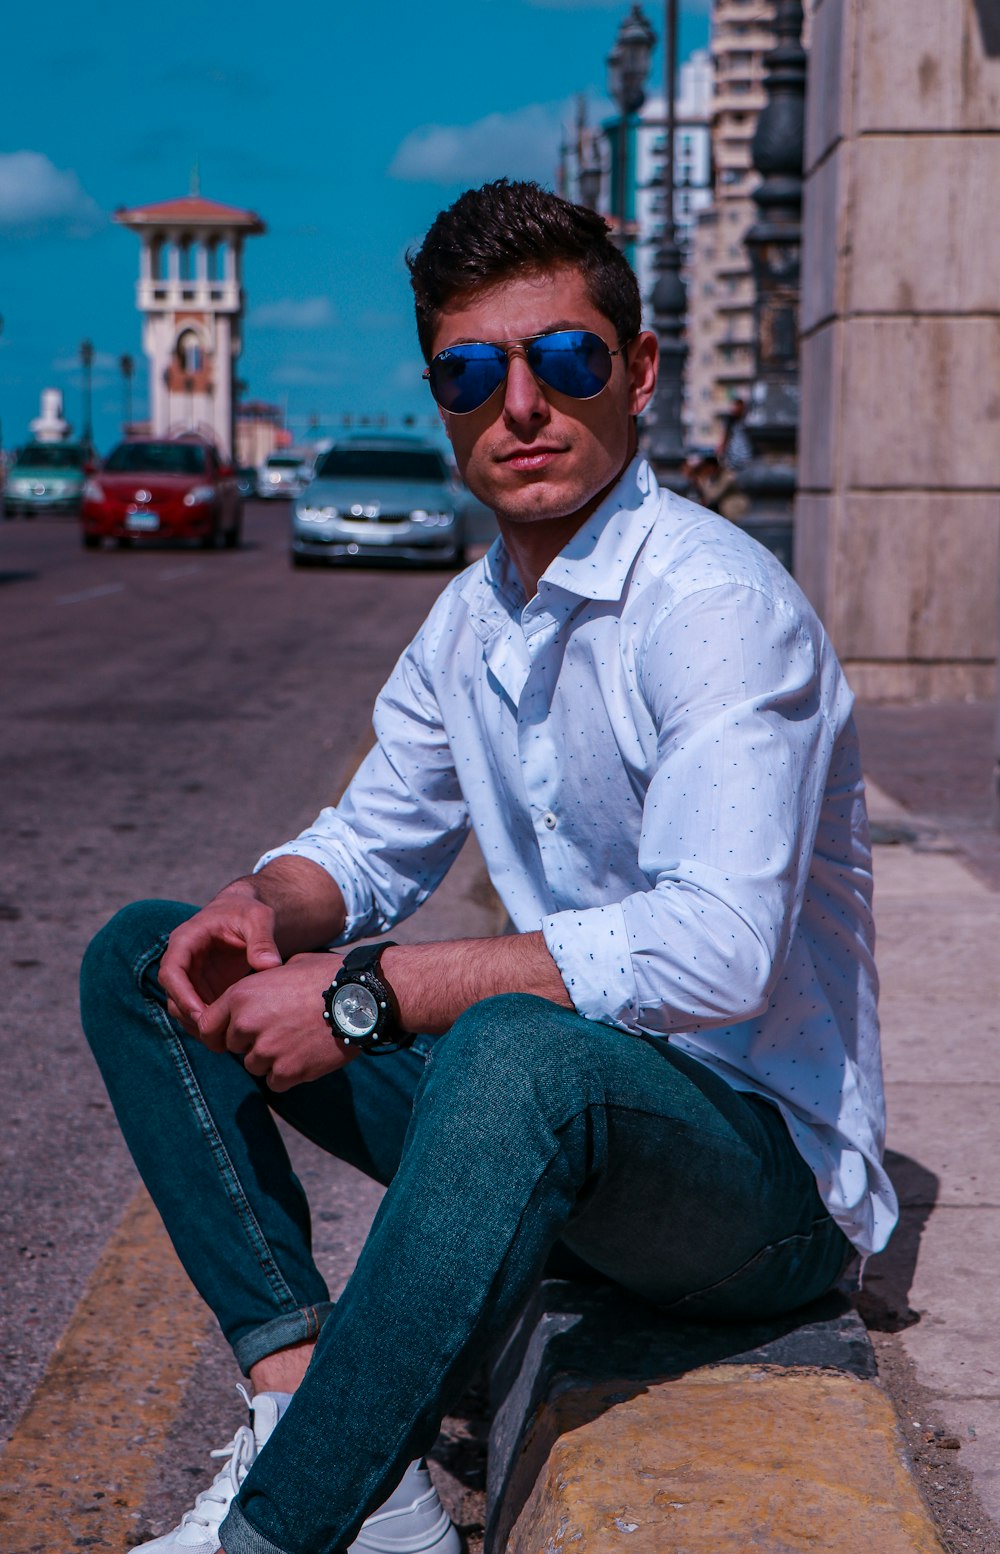 a man sitting on a ledge wearing sunglasses